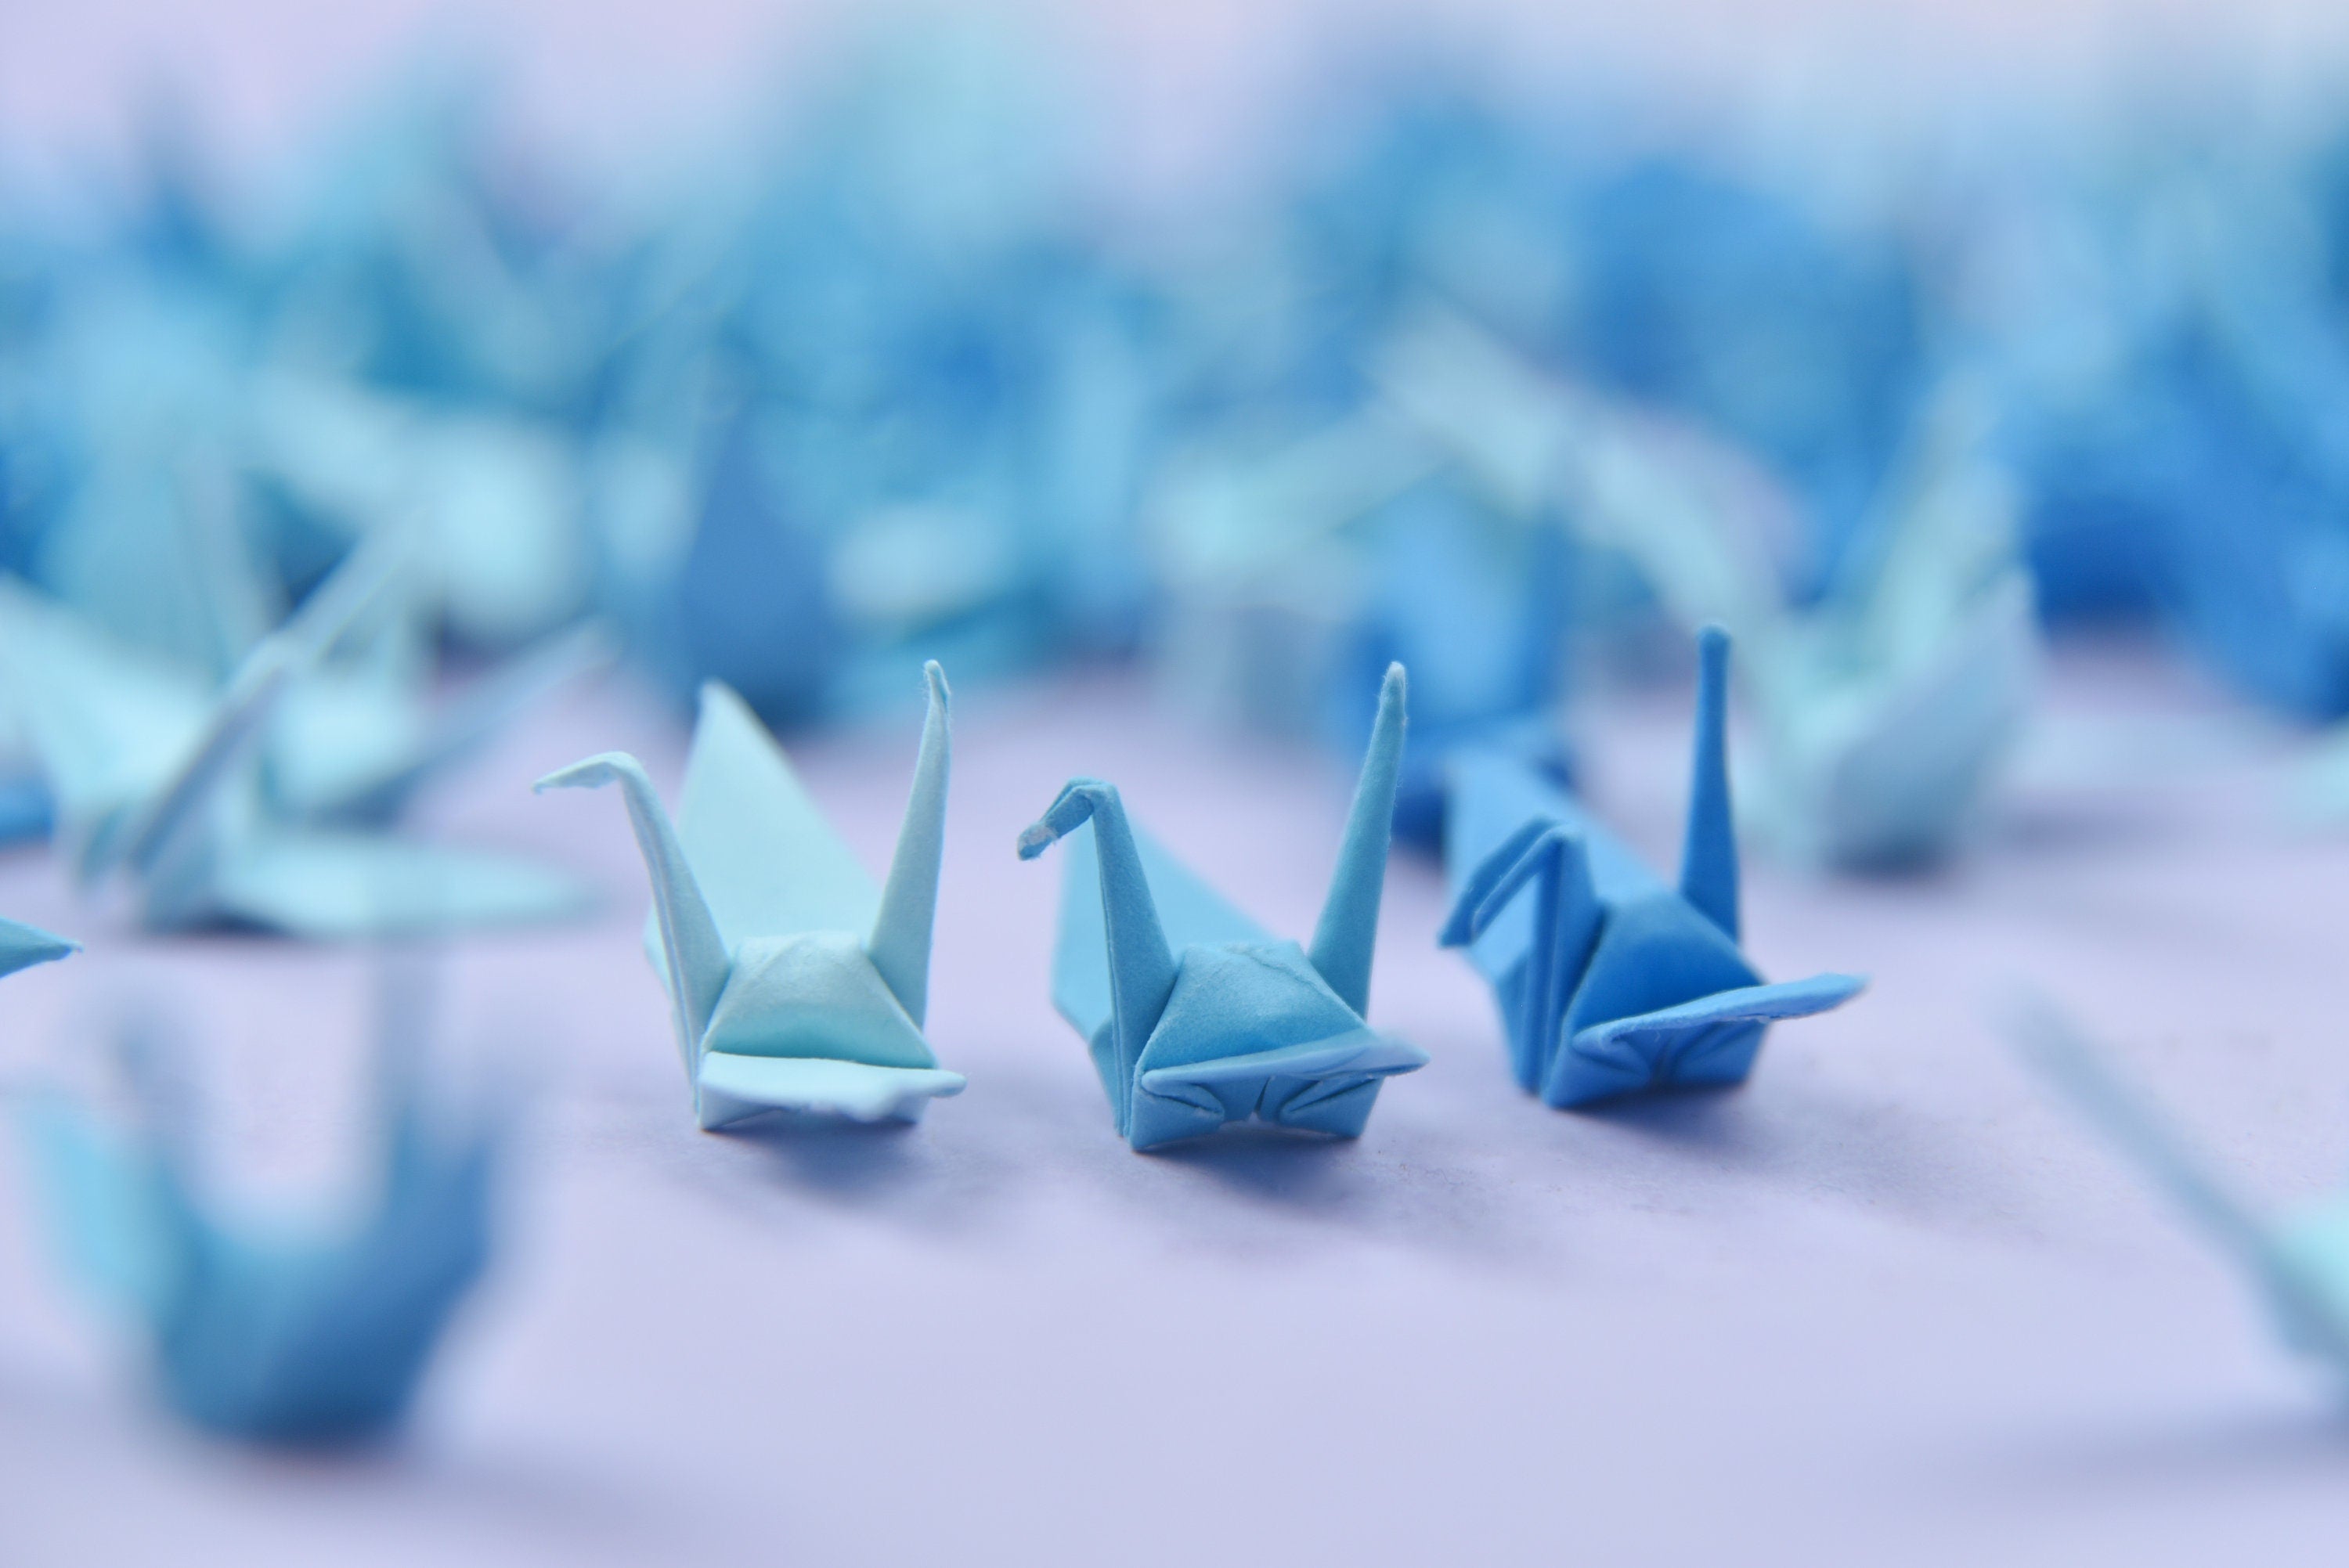 100 Origami Paper Crane Blue Shade Tone Origami crane pequeña 1.5x1.5 pulgadas para decoración de bodas, regalo de aniversario, San Valentín